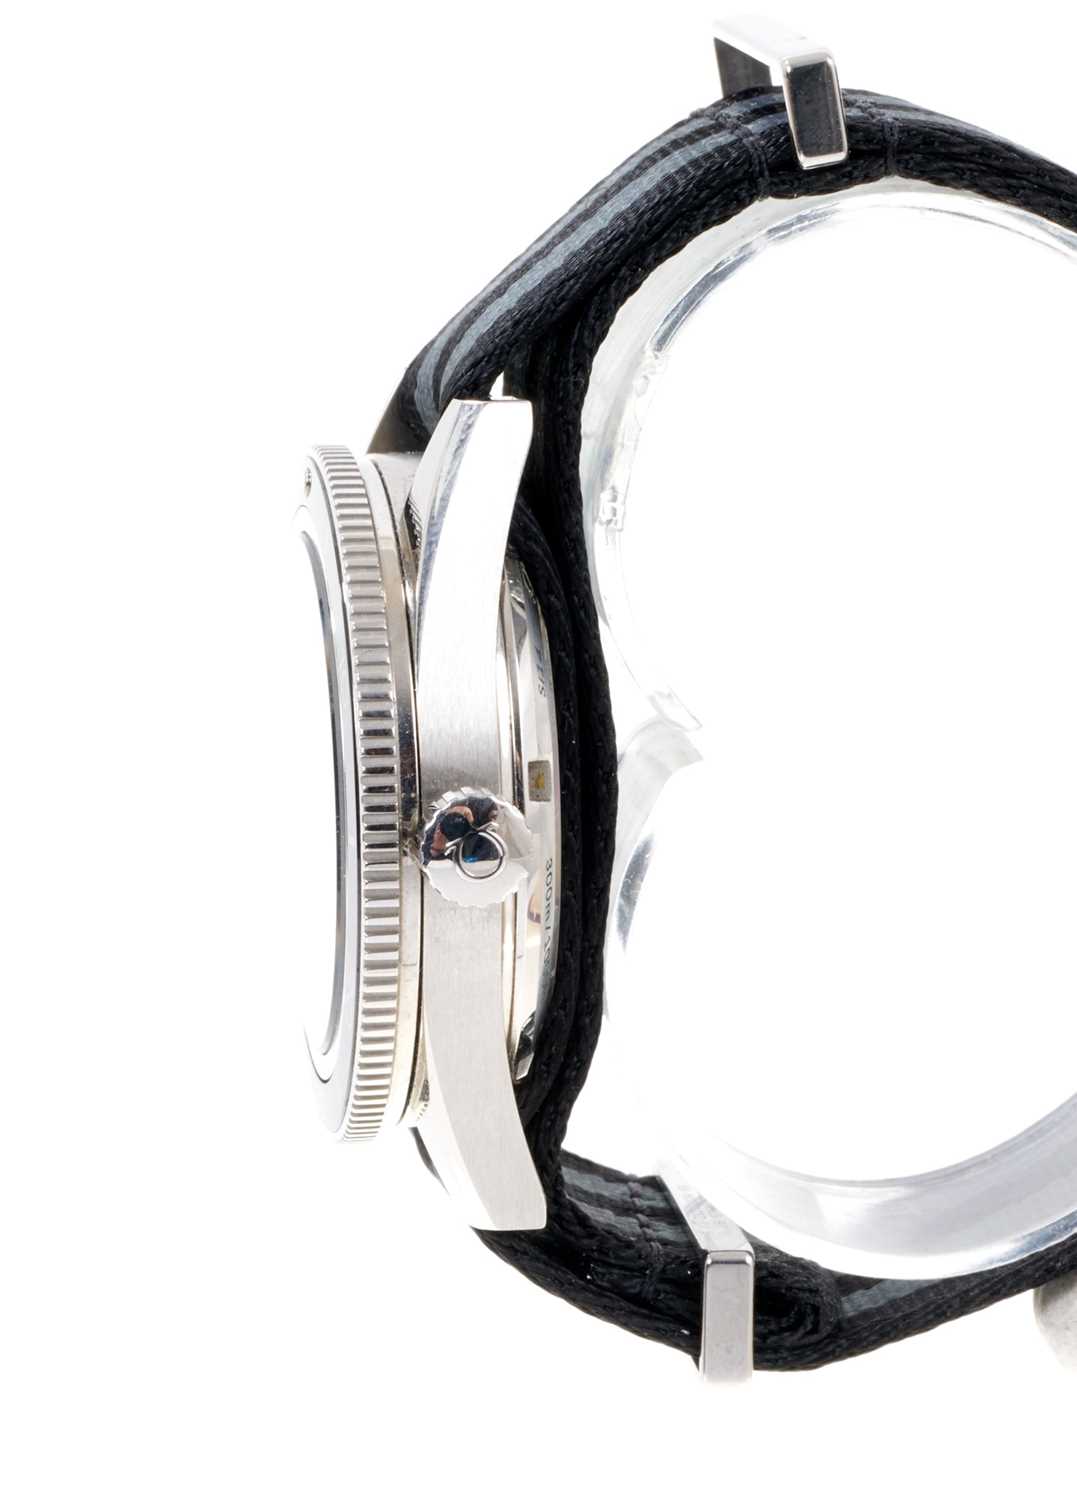 Fine Gentlemen’s modern Omega Seamaster wristwatch in box with certificate - Image 3 of 6